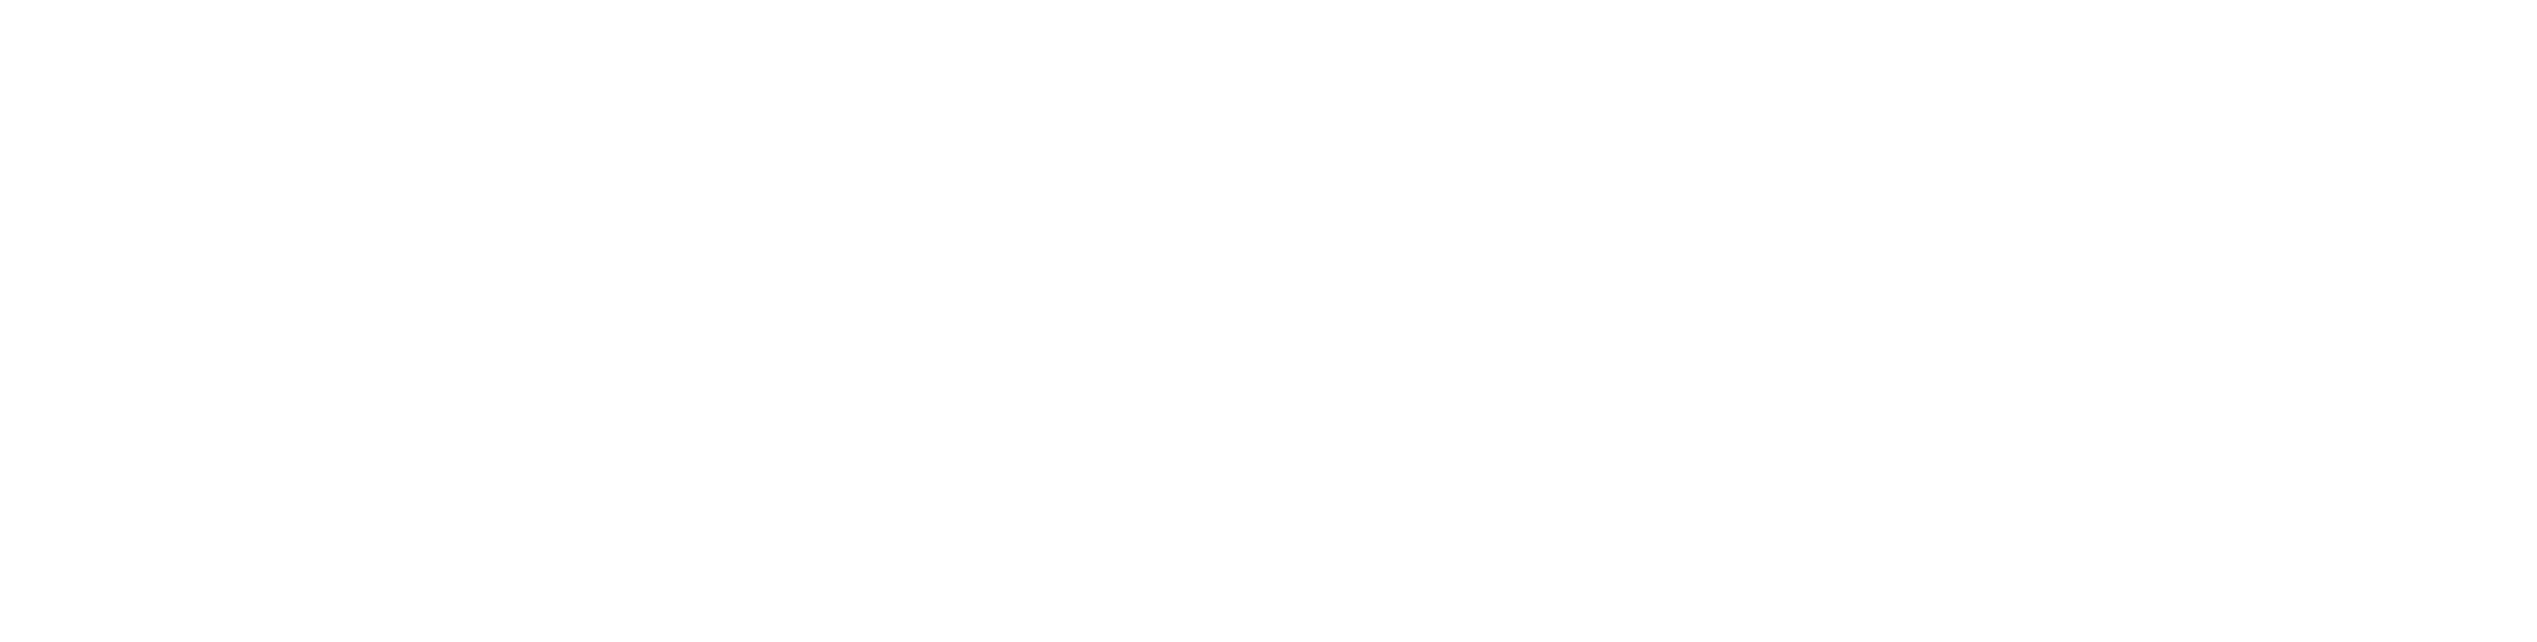 Paladin Data Corp. Logo